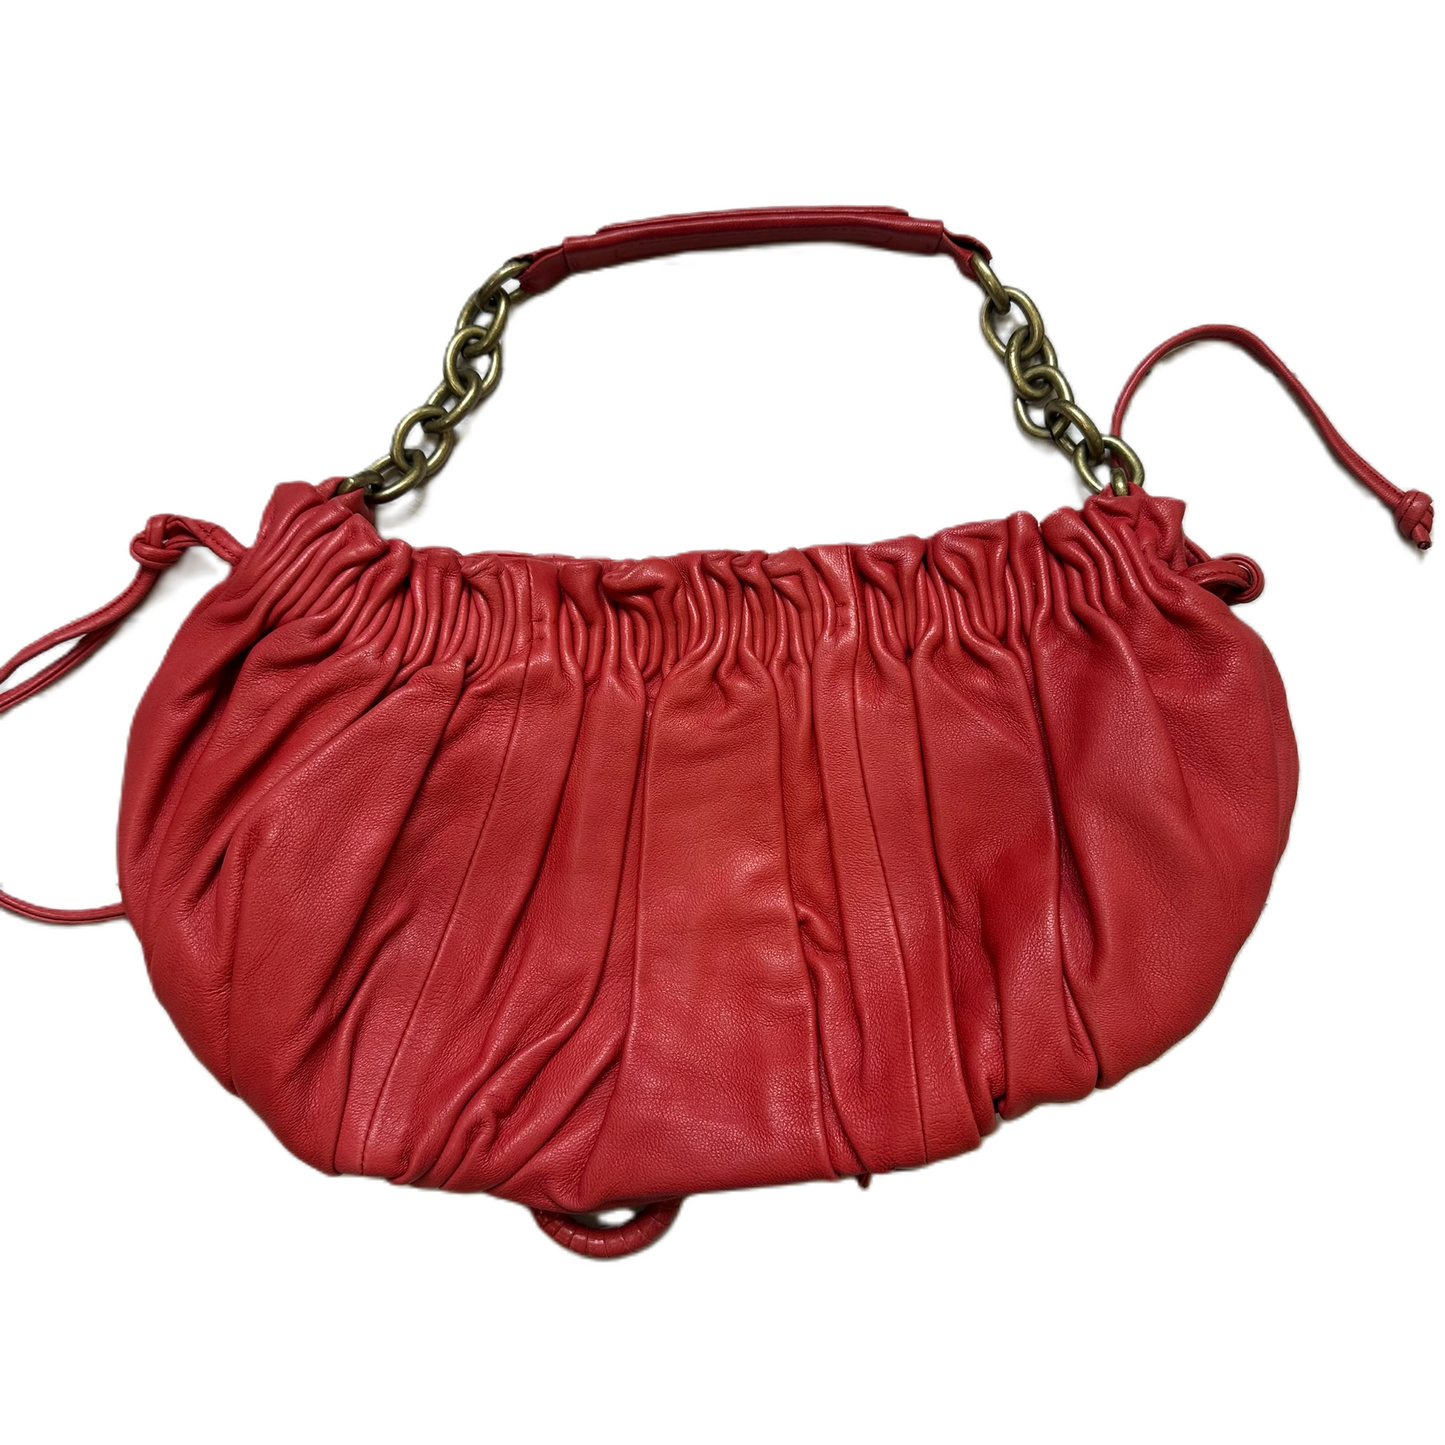 Handbag By Bcbgmaxazria  Size: Small